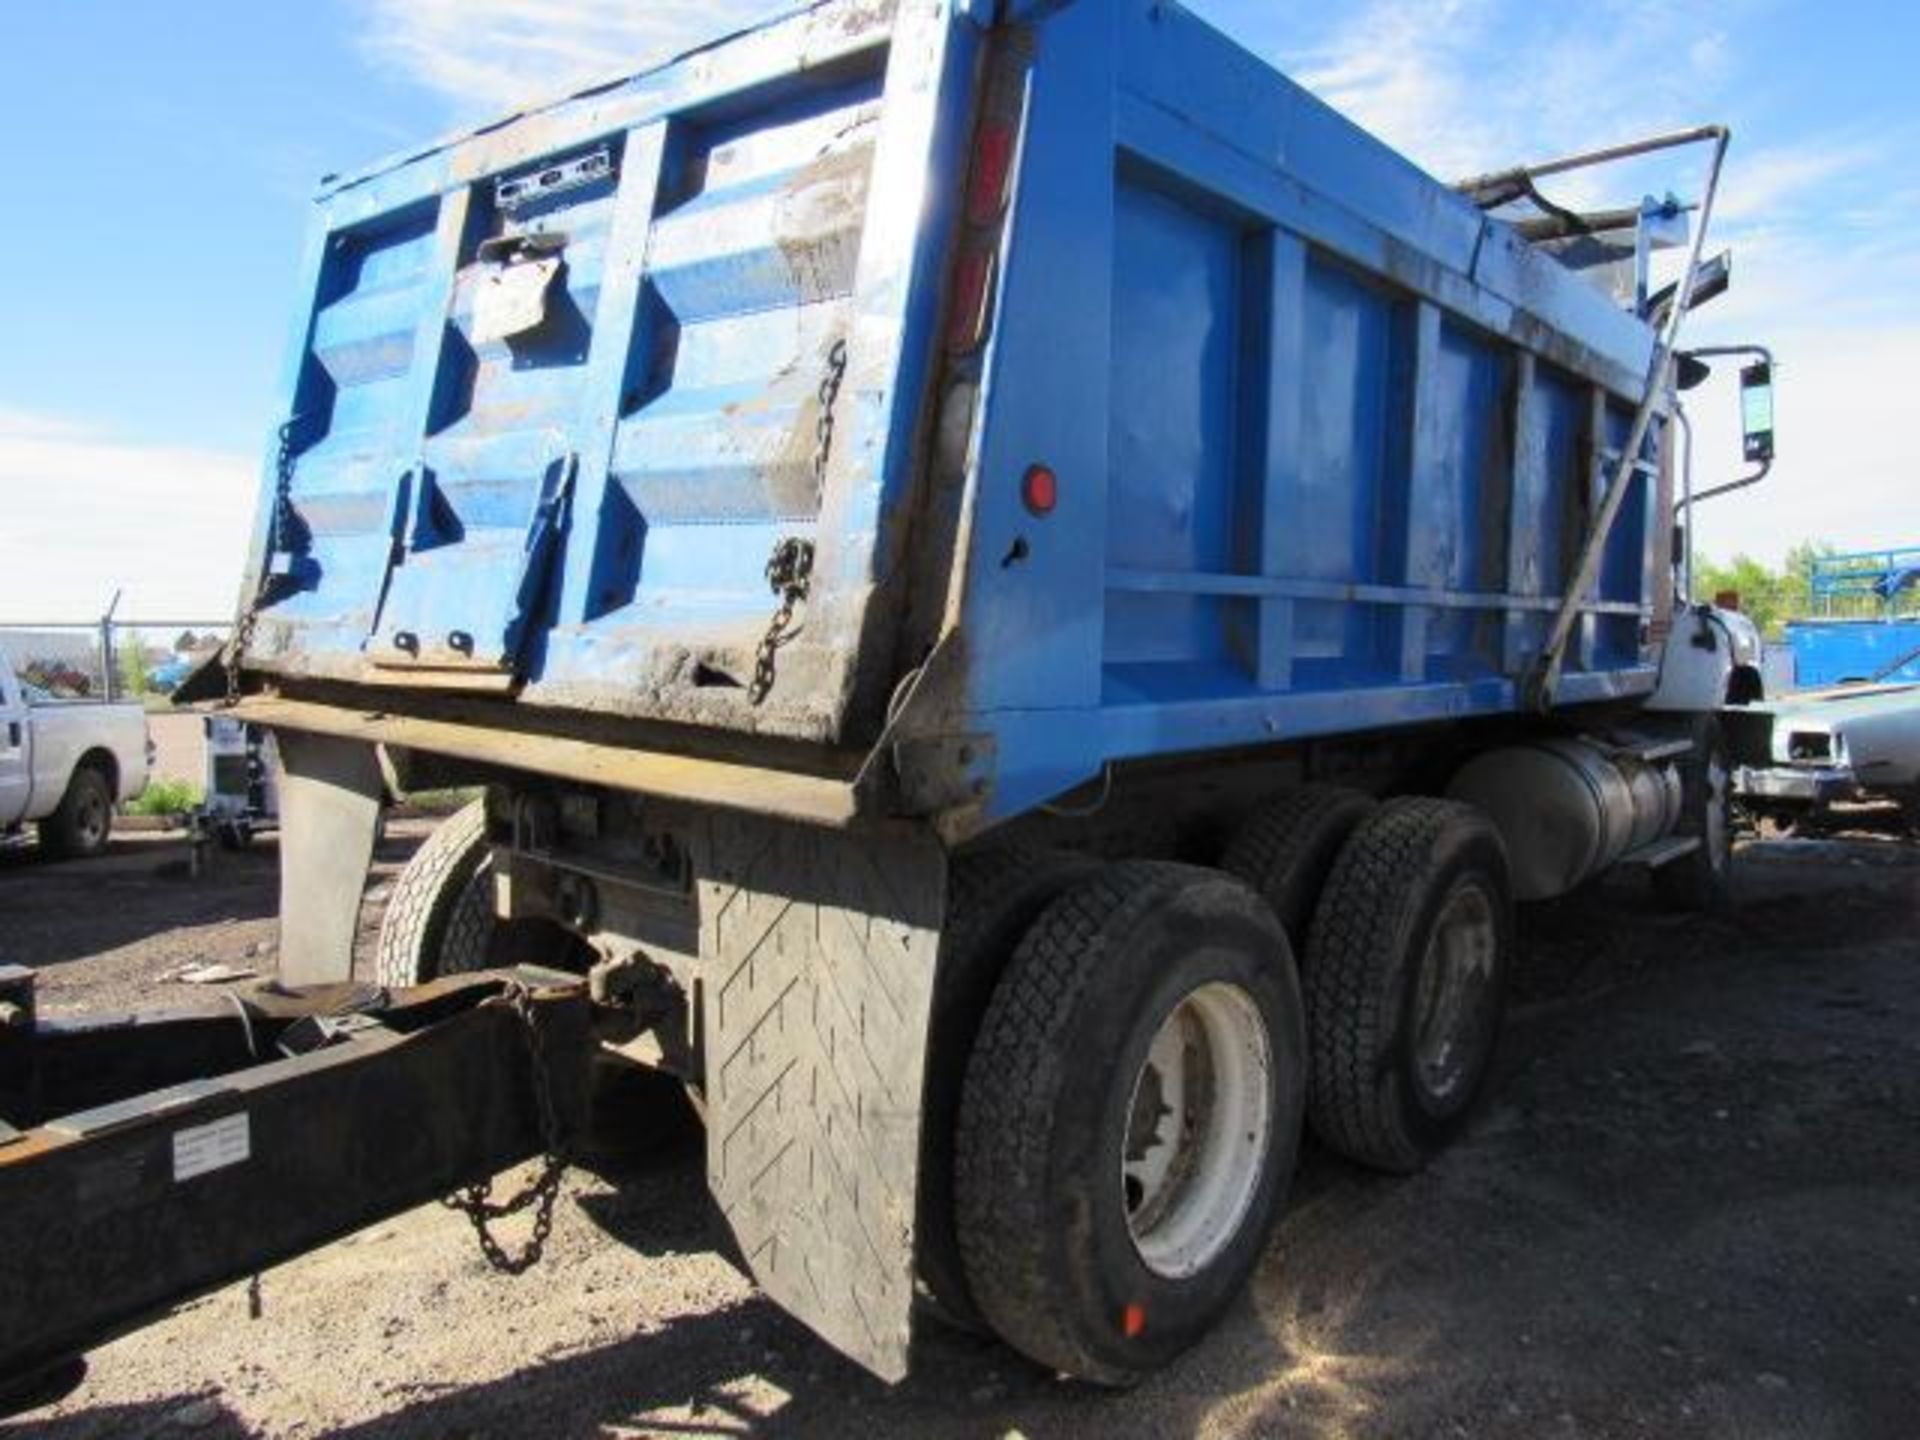 2005 International 5600 Dump Truck 6 x 4, VIN # 1HTXHAPR755031266, 18-Speed Manual Eaton Fuller - Image 5 of 9